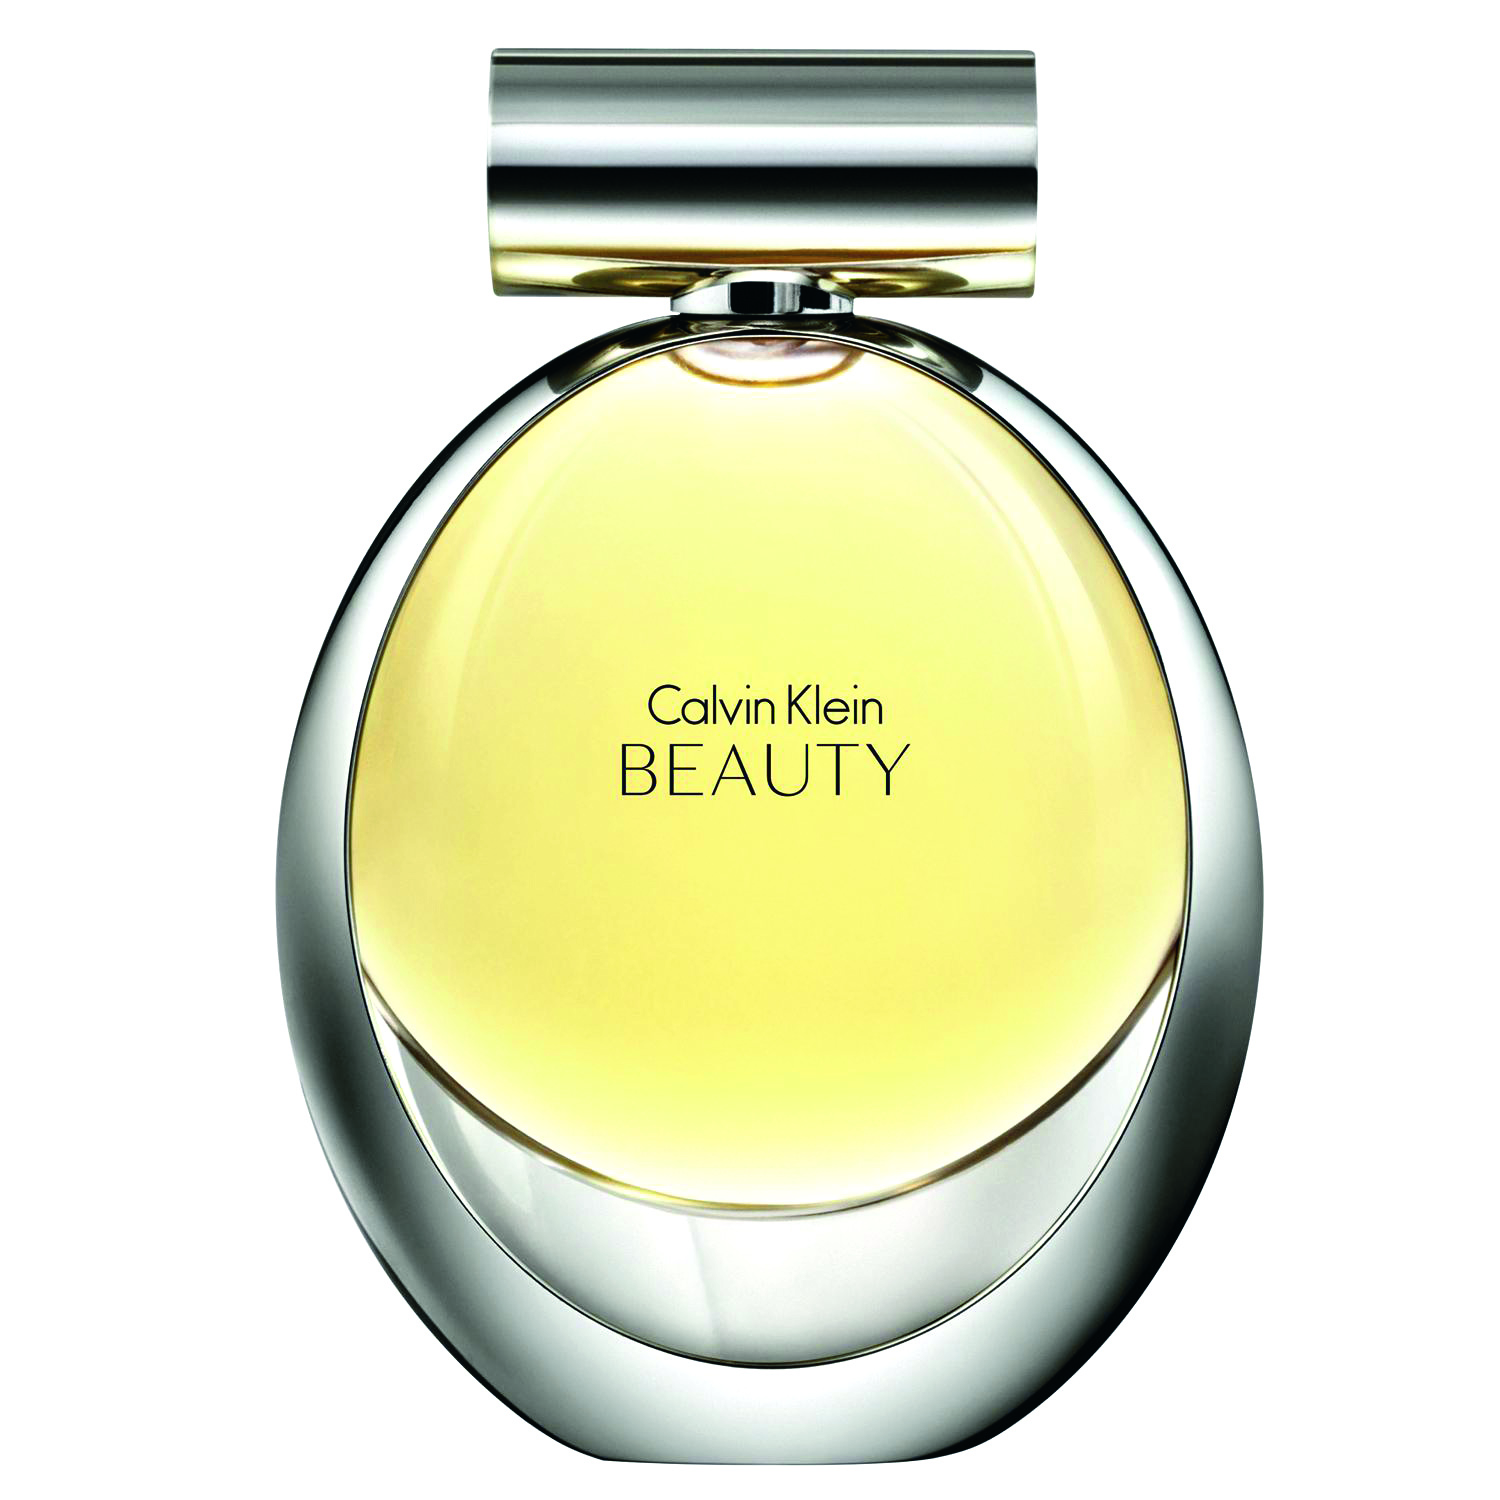 Parfem Calvin Klein Beauty, Eau de Parfum, 100 ml (razlika: 139 kn) / Douglas Hrvatska: 819 kn / Douglas Italija: 680 kn